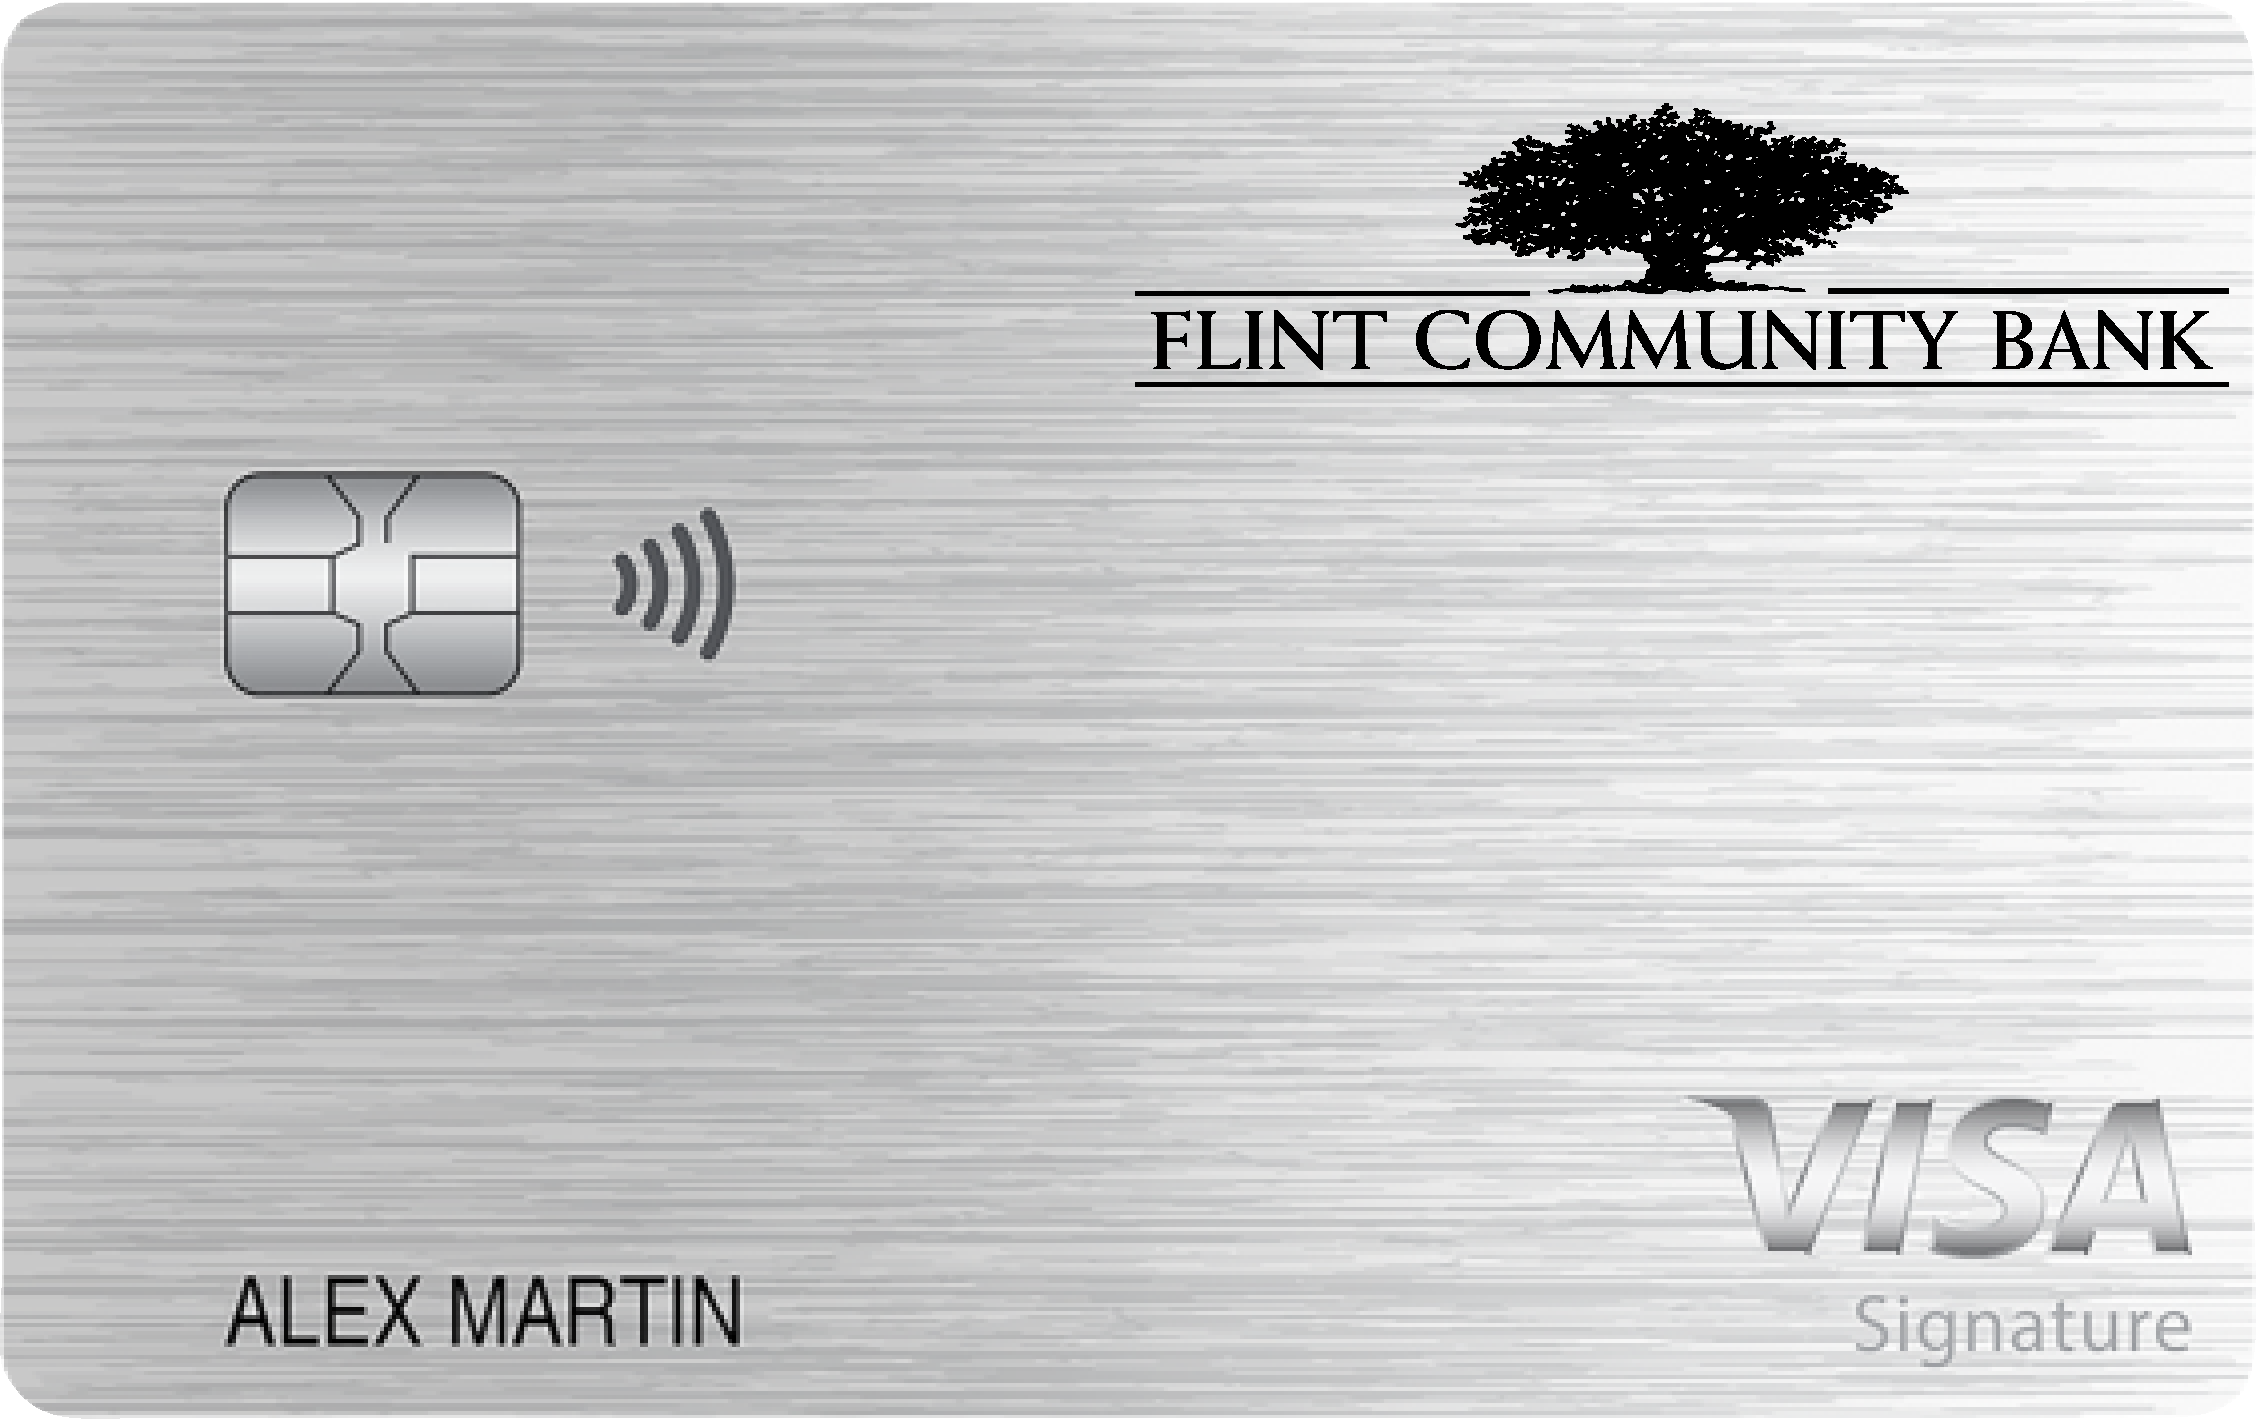 Flint Community Bank